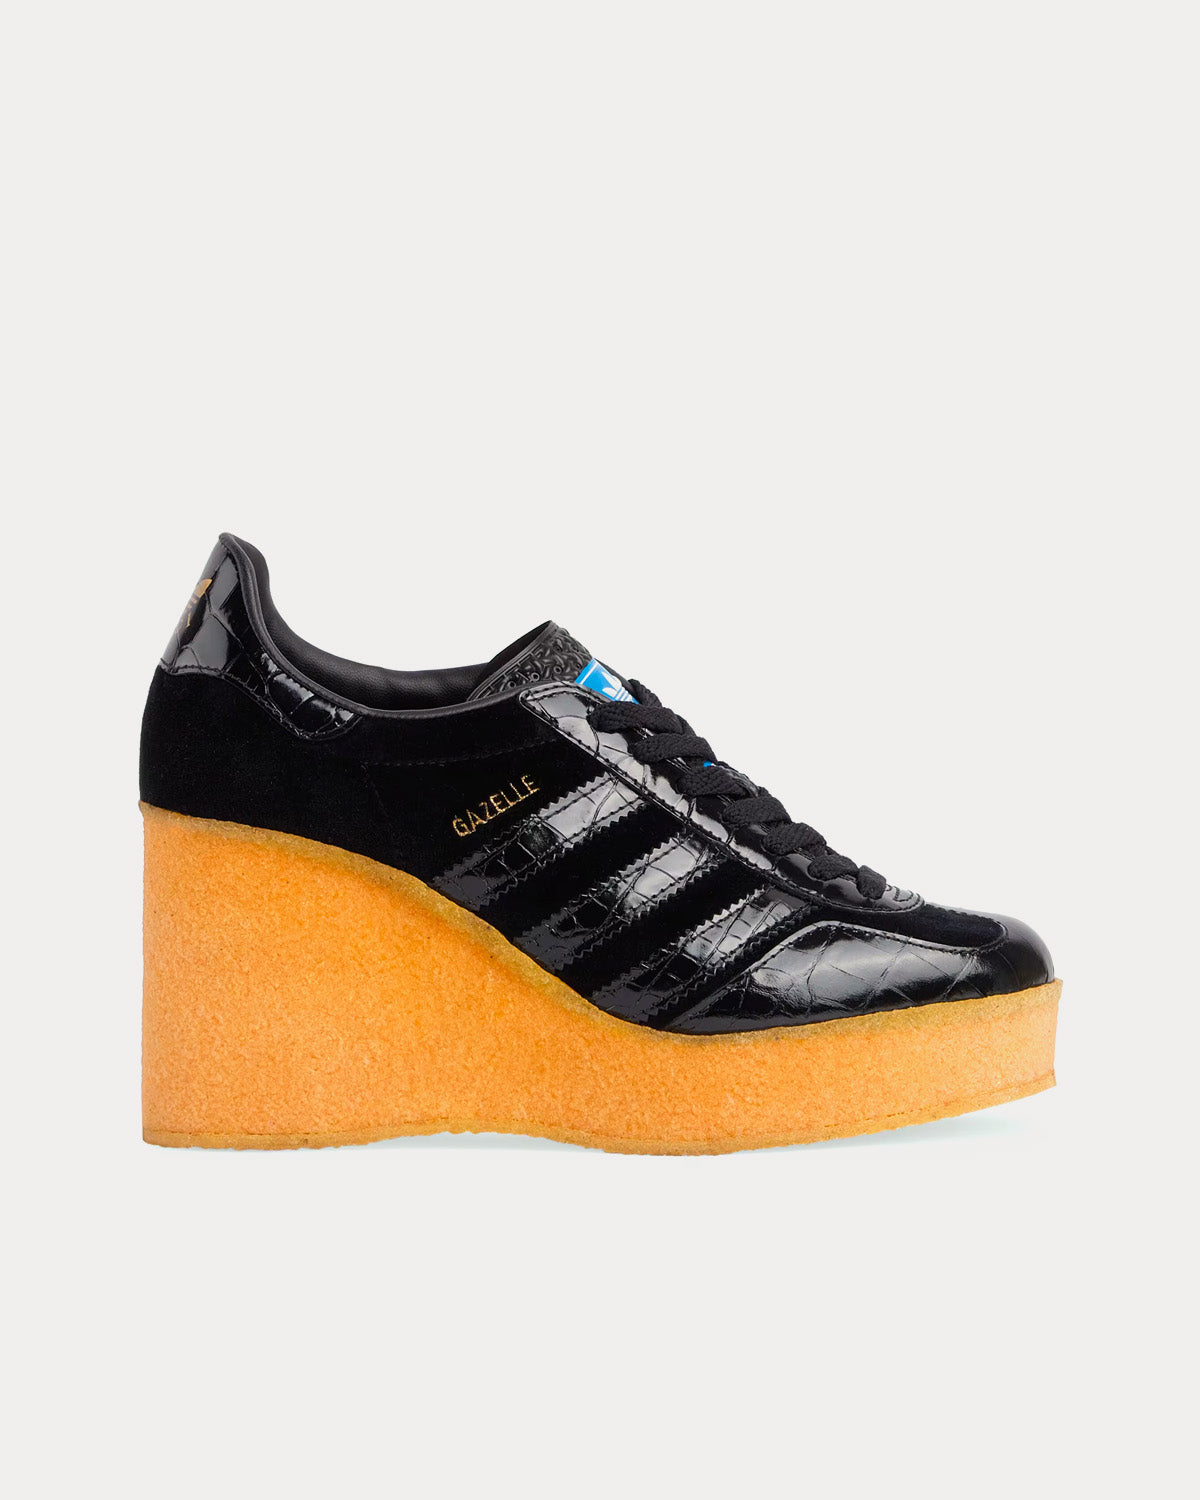 Adidas x Gucci - Gazelle Wedge Black Velvet Low Top Sneakers